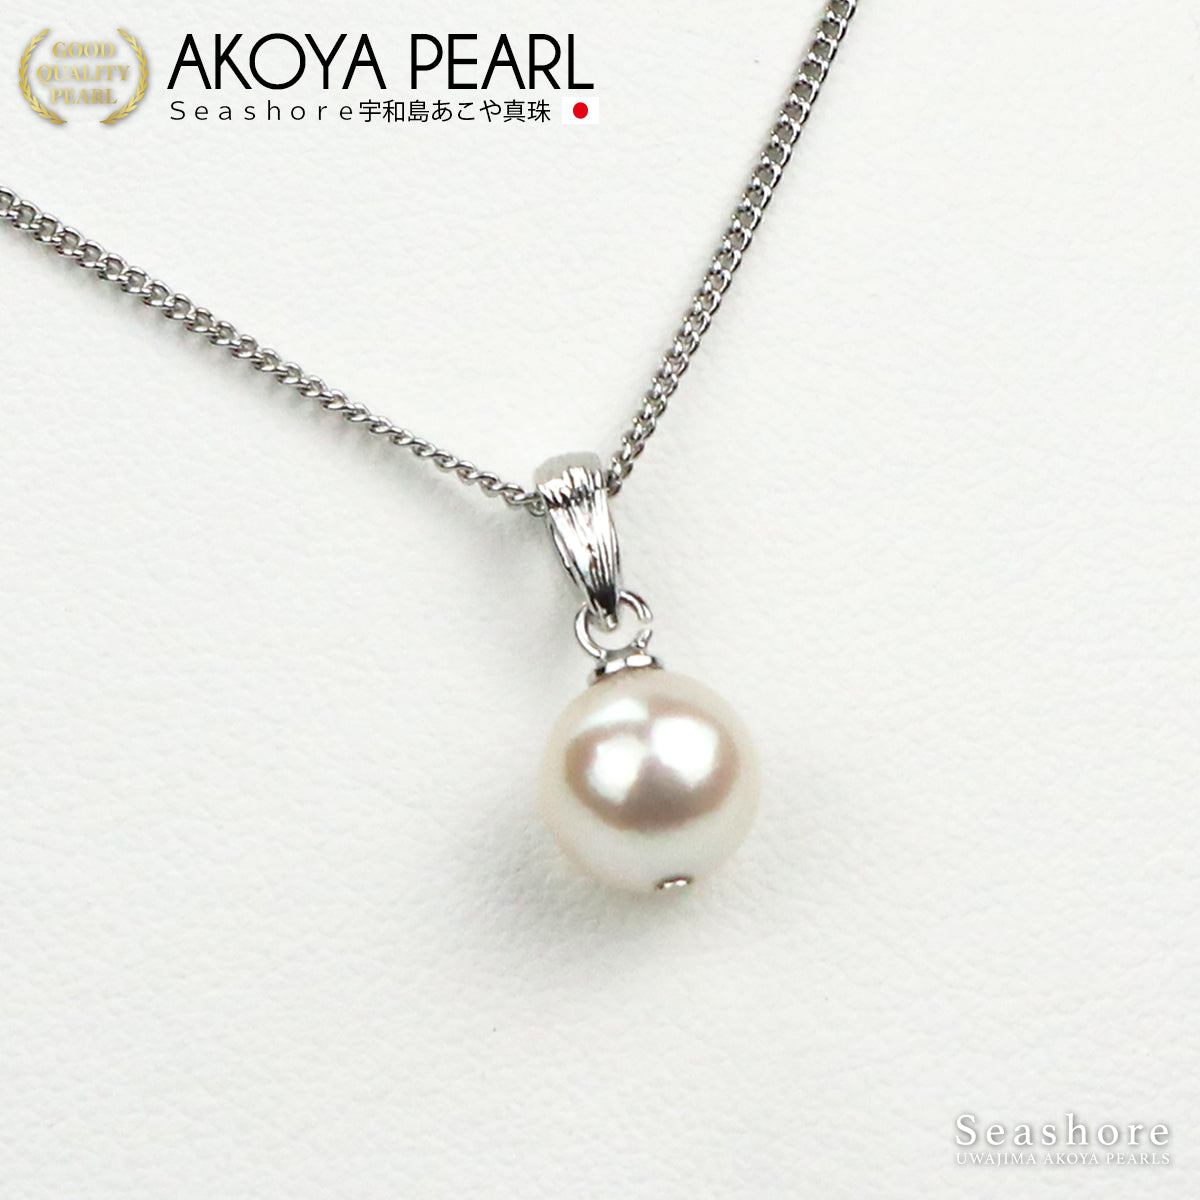 Akoya 珍珠梵蒂冈吊坠 [8.0-8.5mm] 黄铜铑/金 Akoya 珍珠珍珠项链 [2 种颜色]